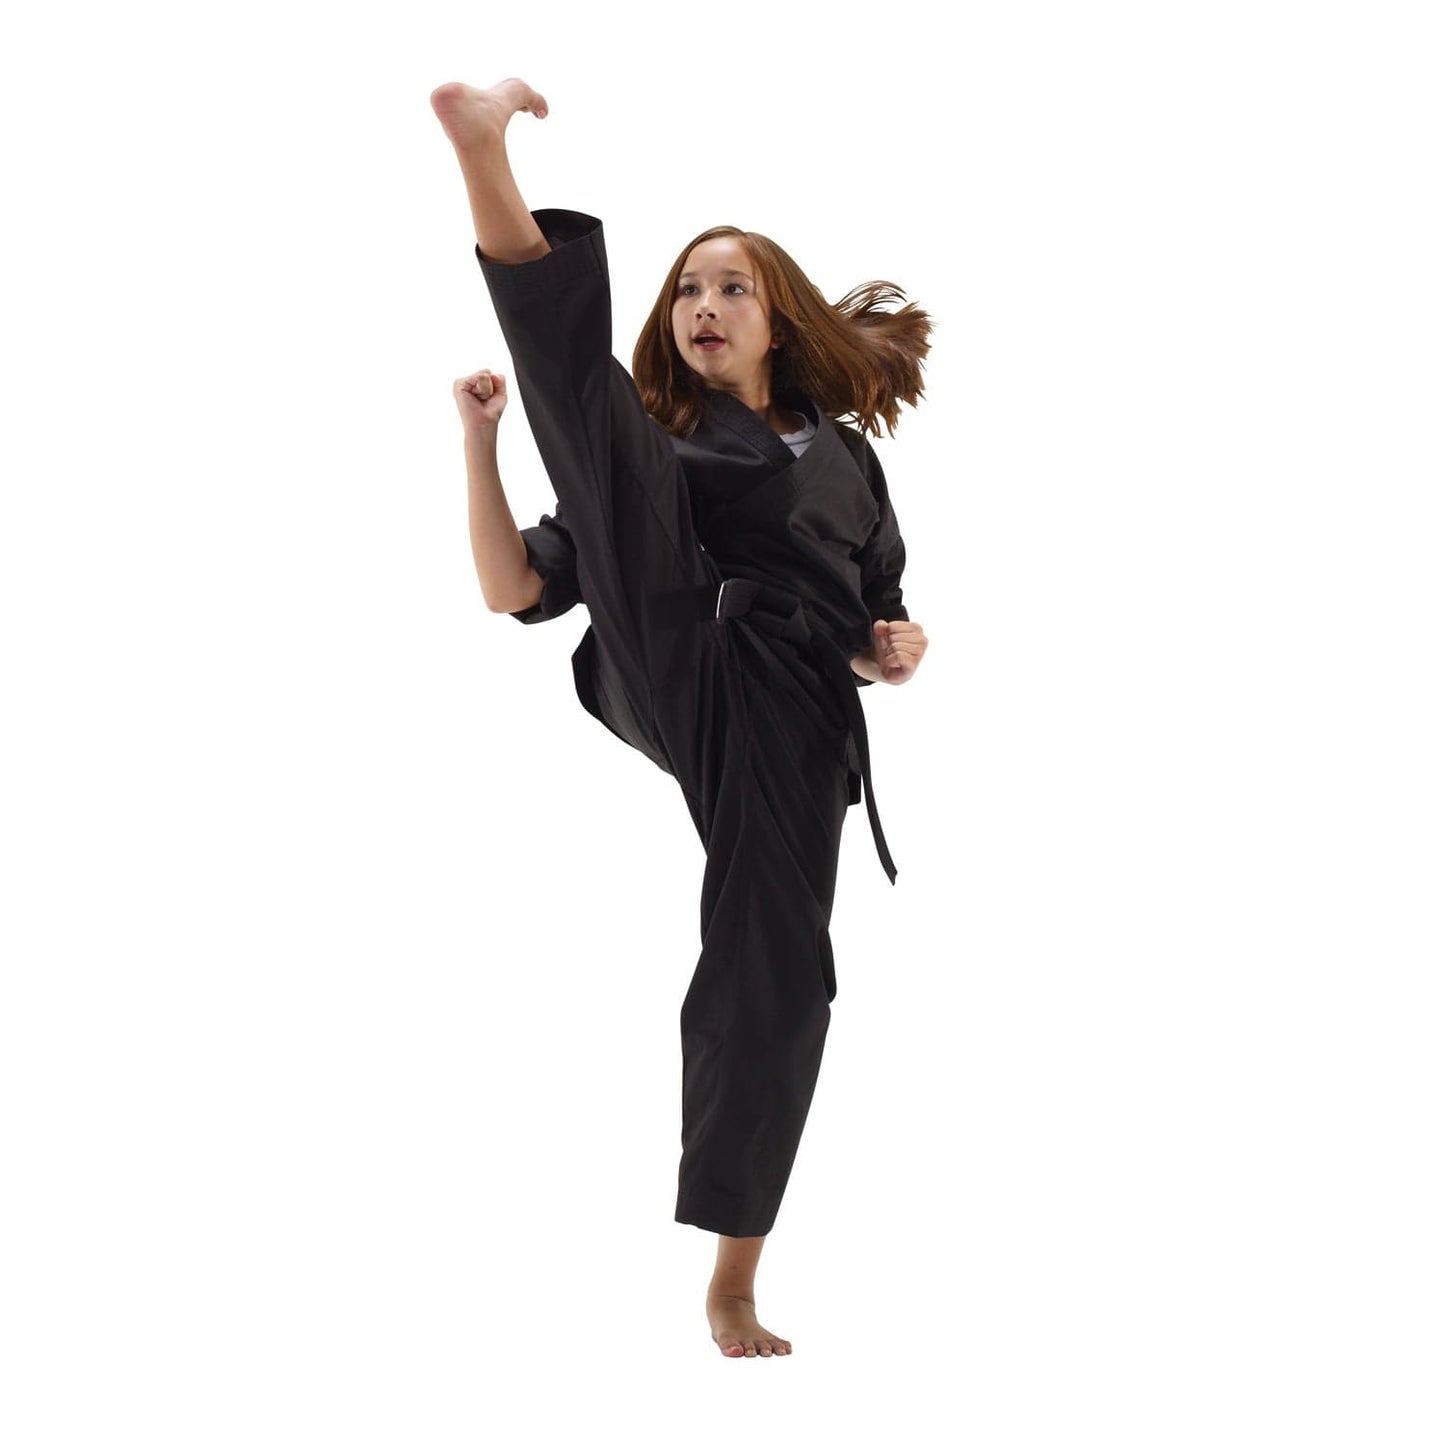 Macho sporting goods Black / 000 MACHO TRADITIONAL MIDDLEWEIGHT Karate